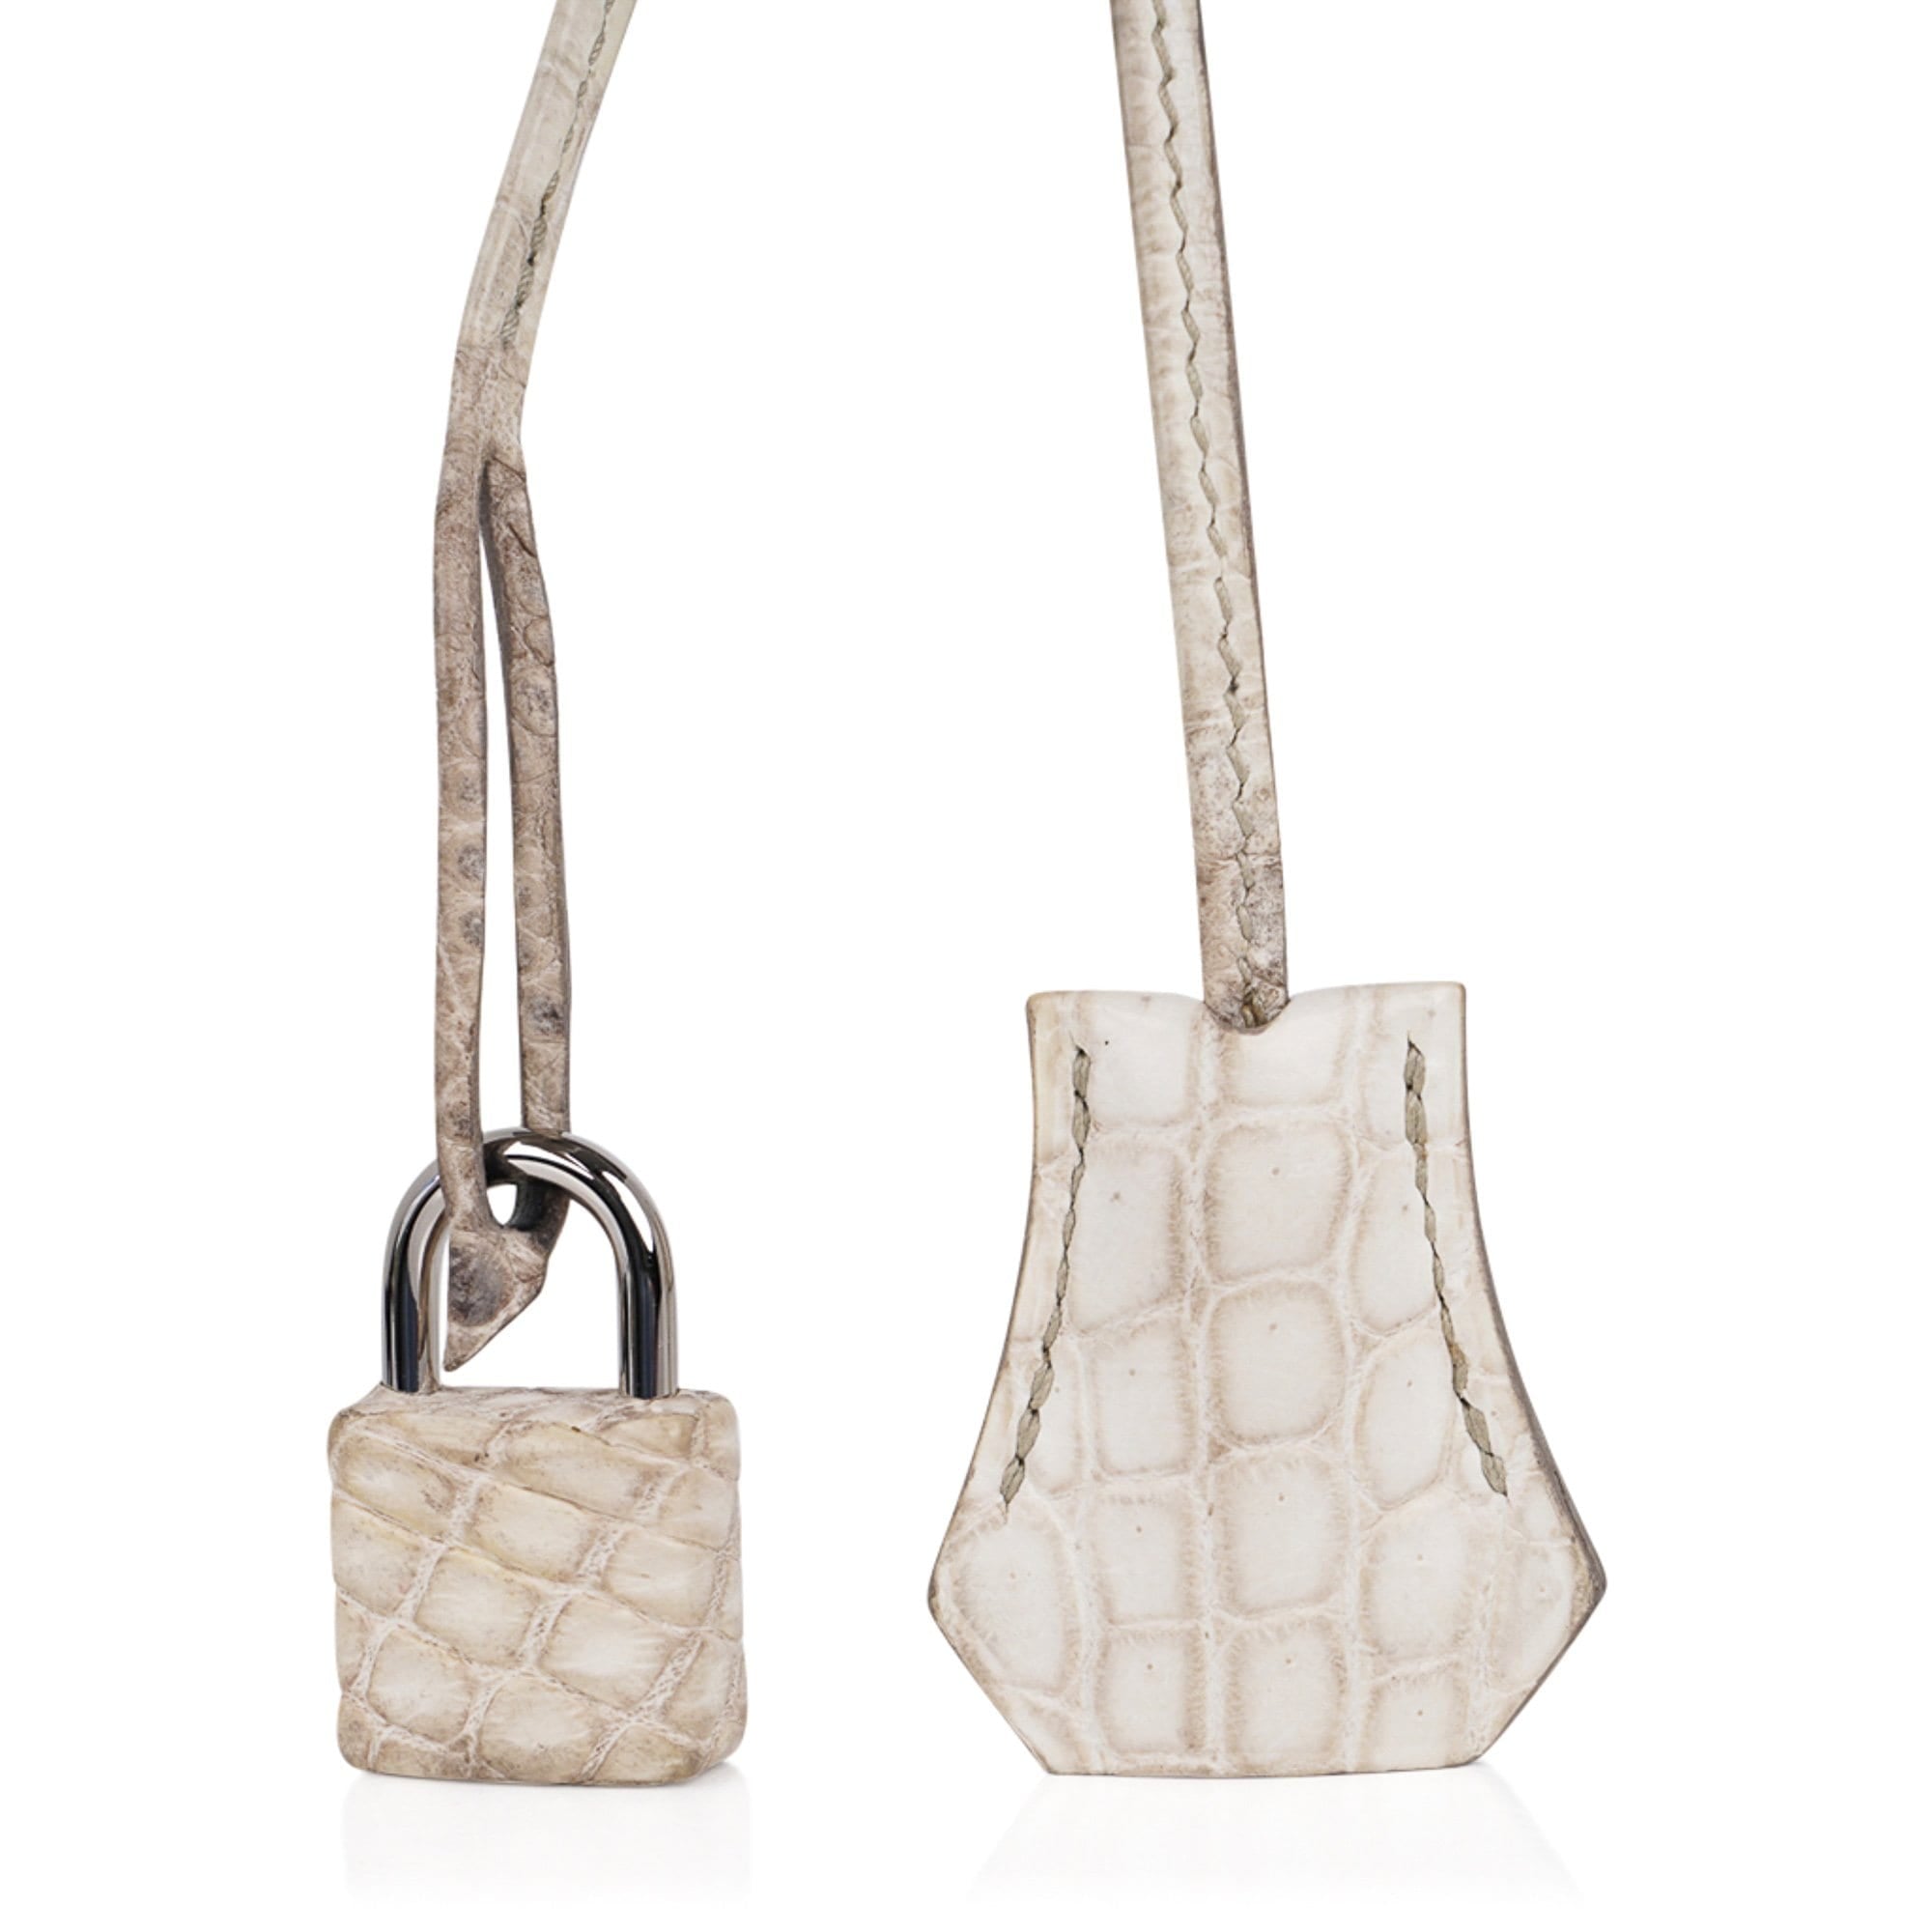 Exceptional and untraceable Hermès Kelly saddle bag handbag 32cm